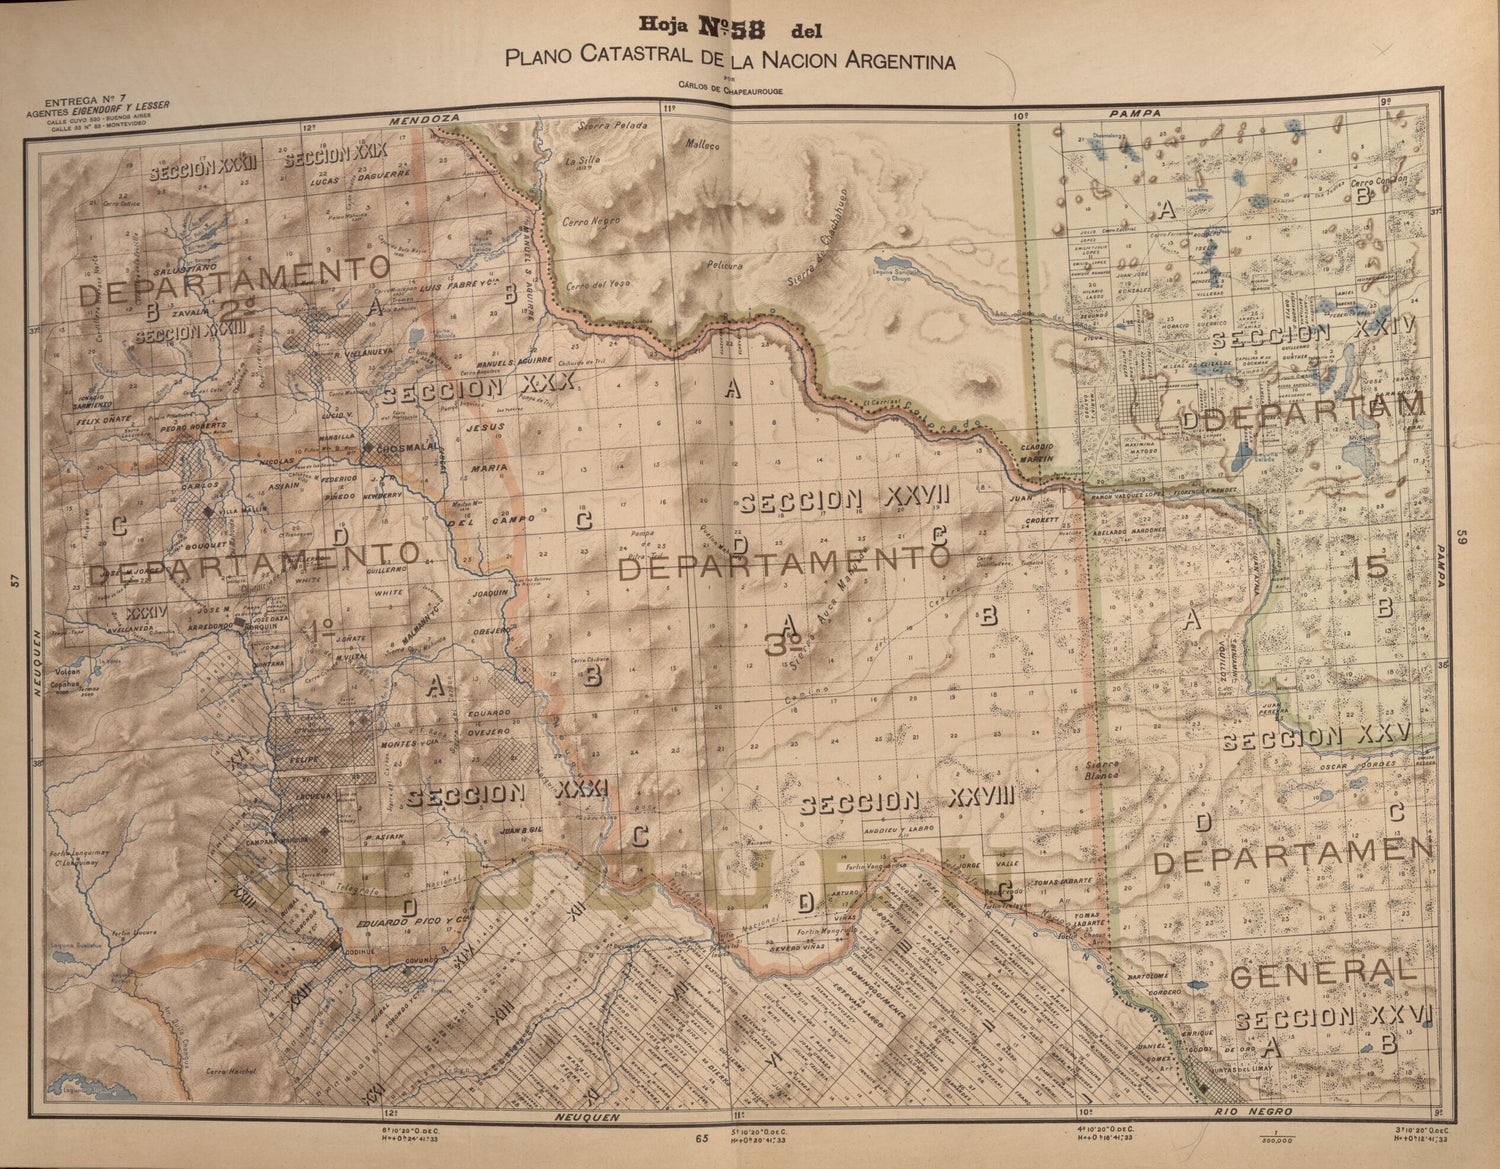 This old map of Plano Catastral De La Nacion Hoja No. 58 from República Argentina from 1905 was created by Carlos De Chapeaurouge in 1905